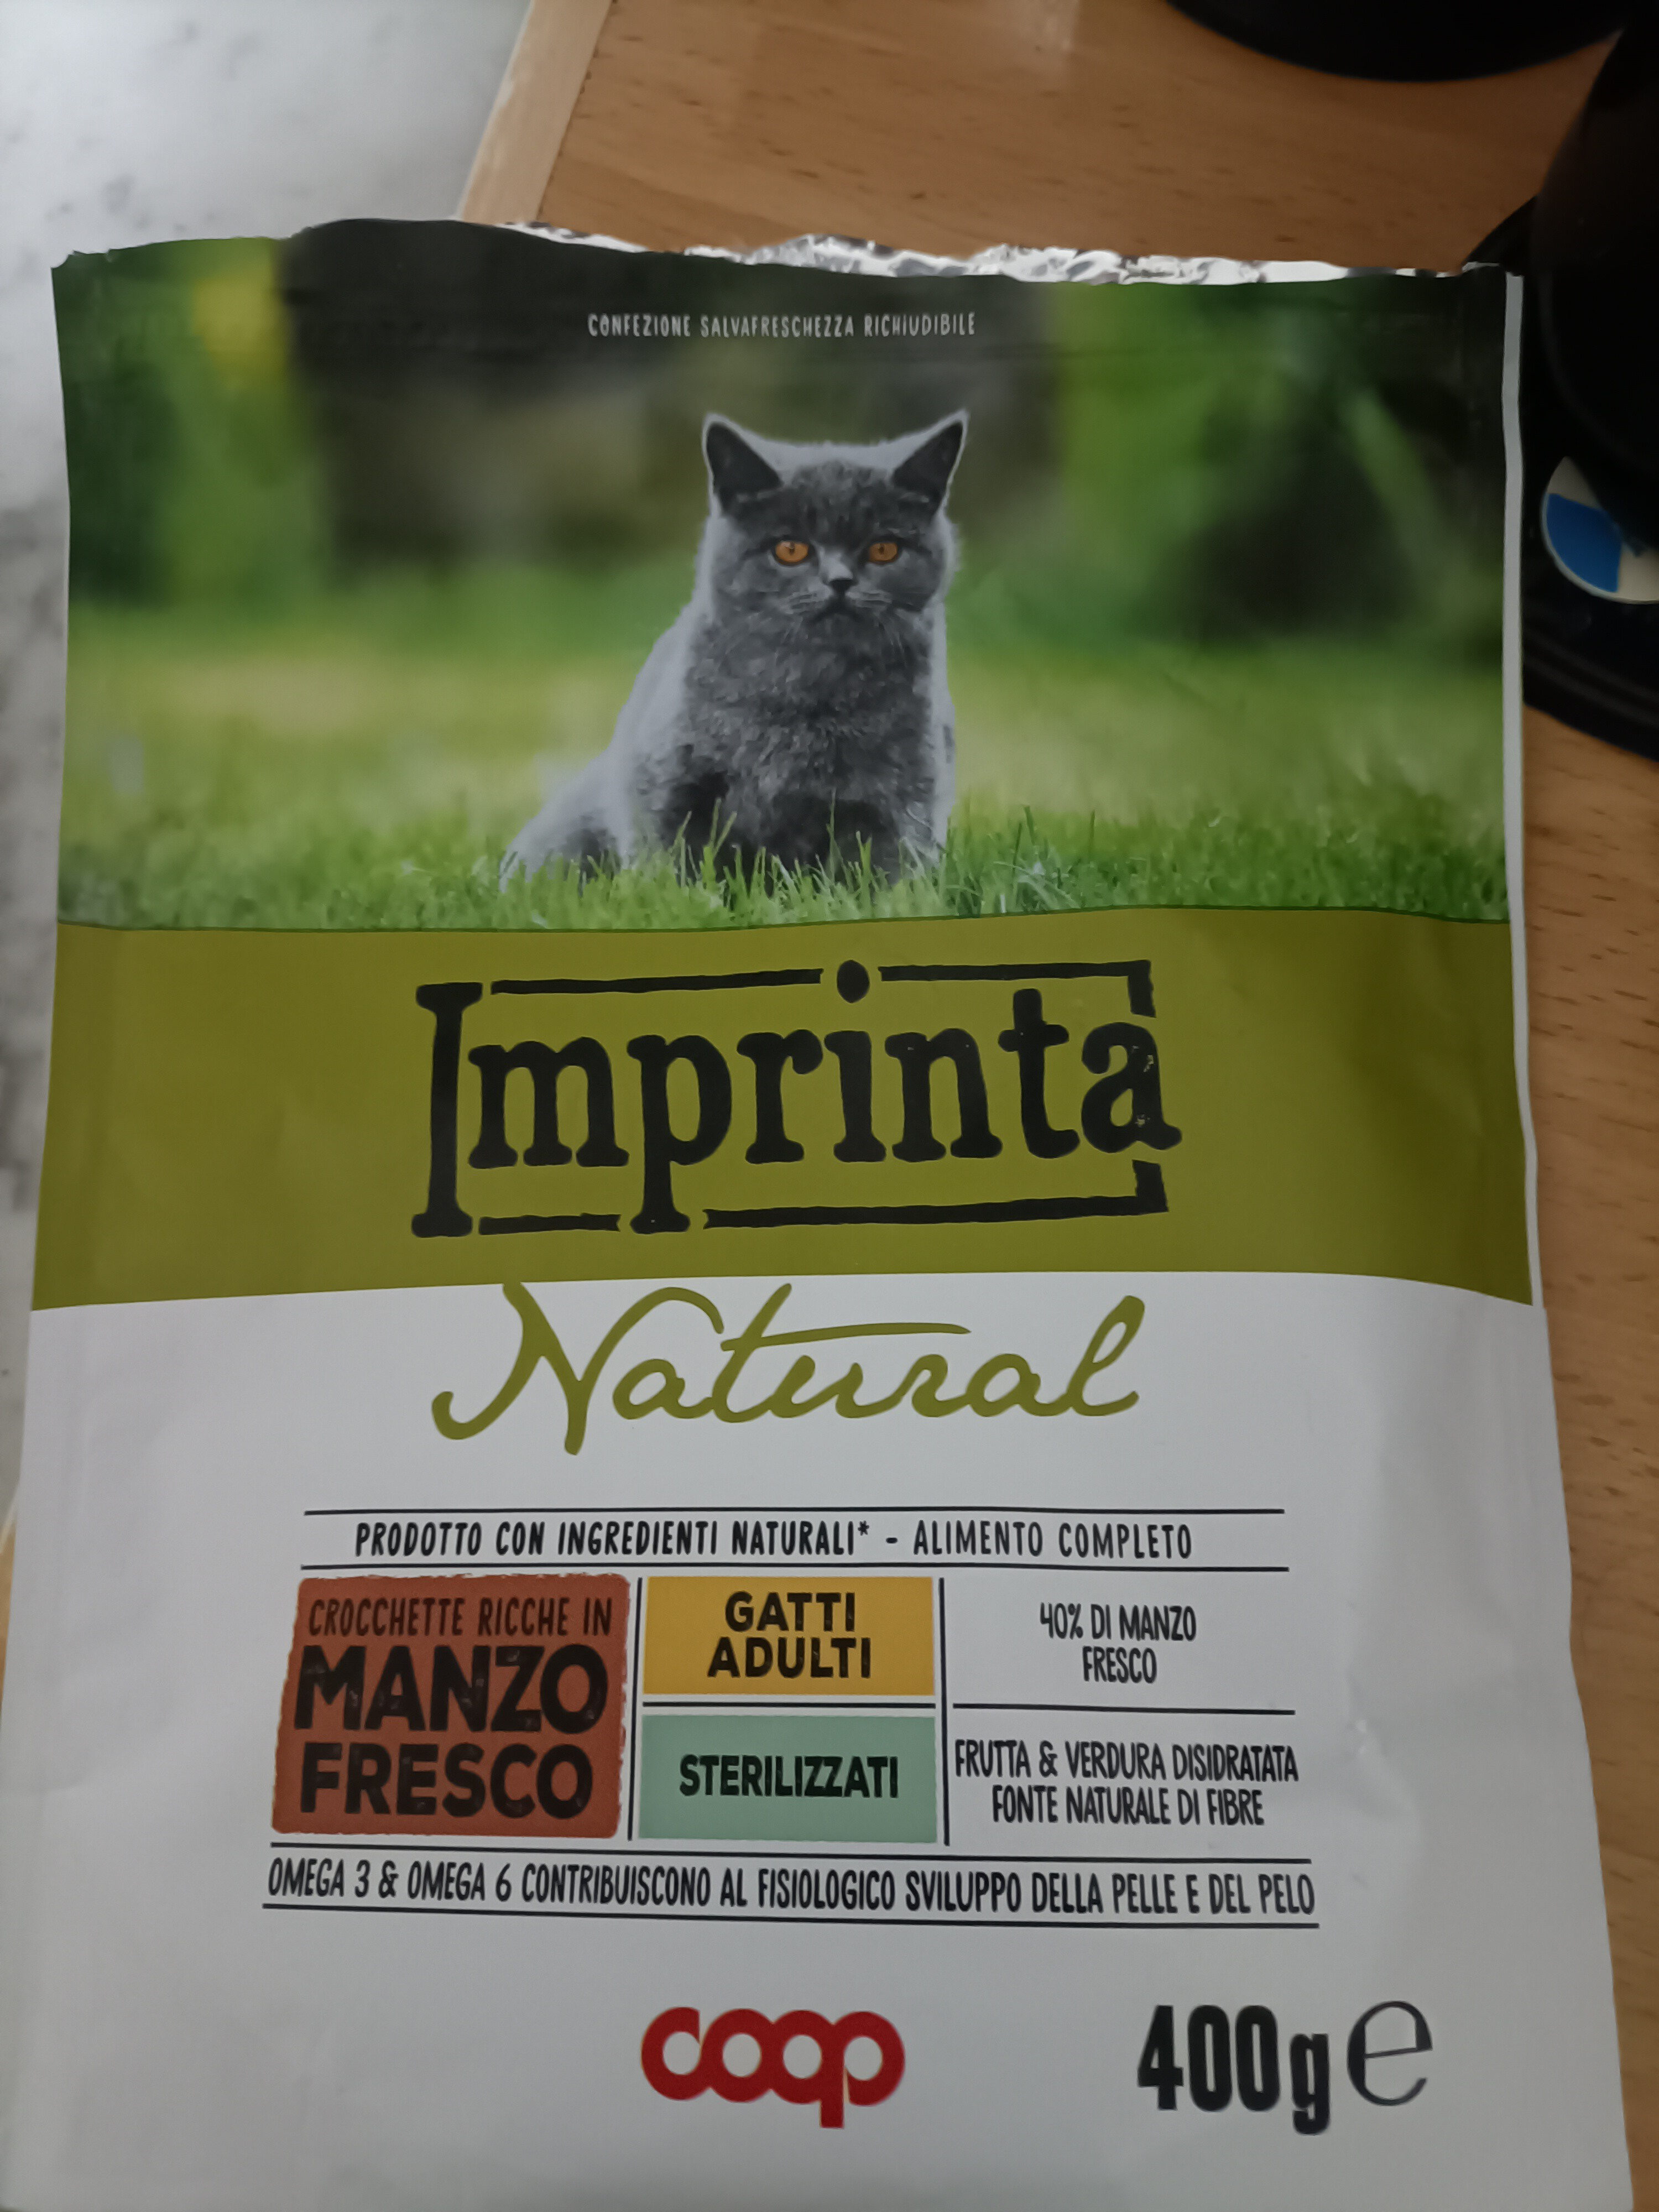 imprinta natural - Product - it